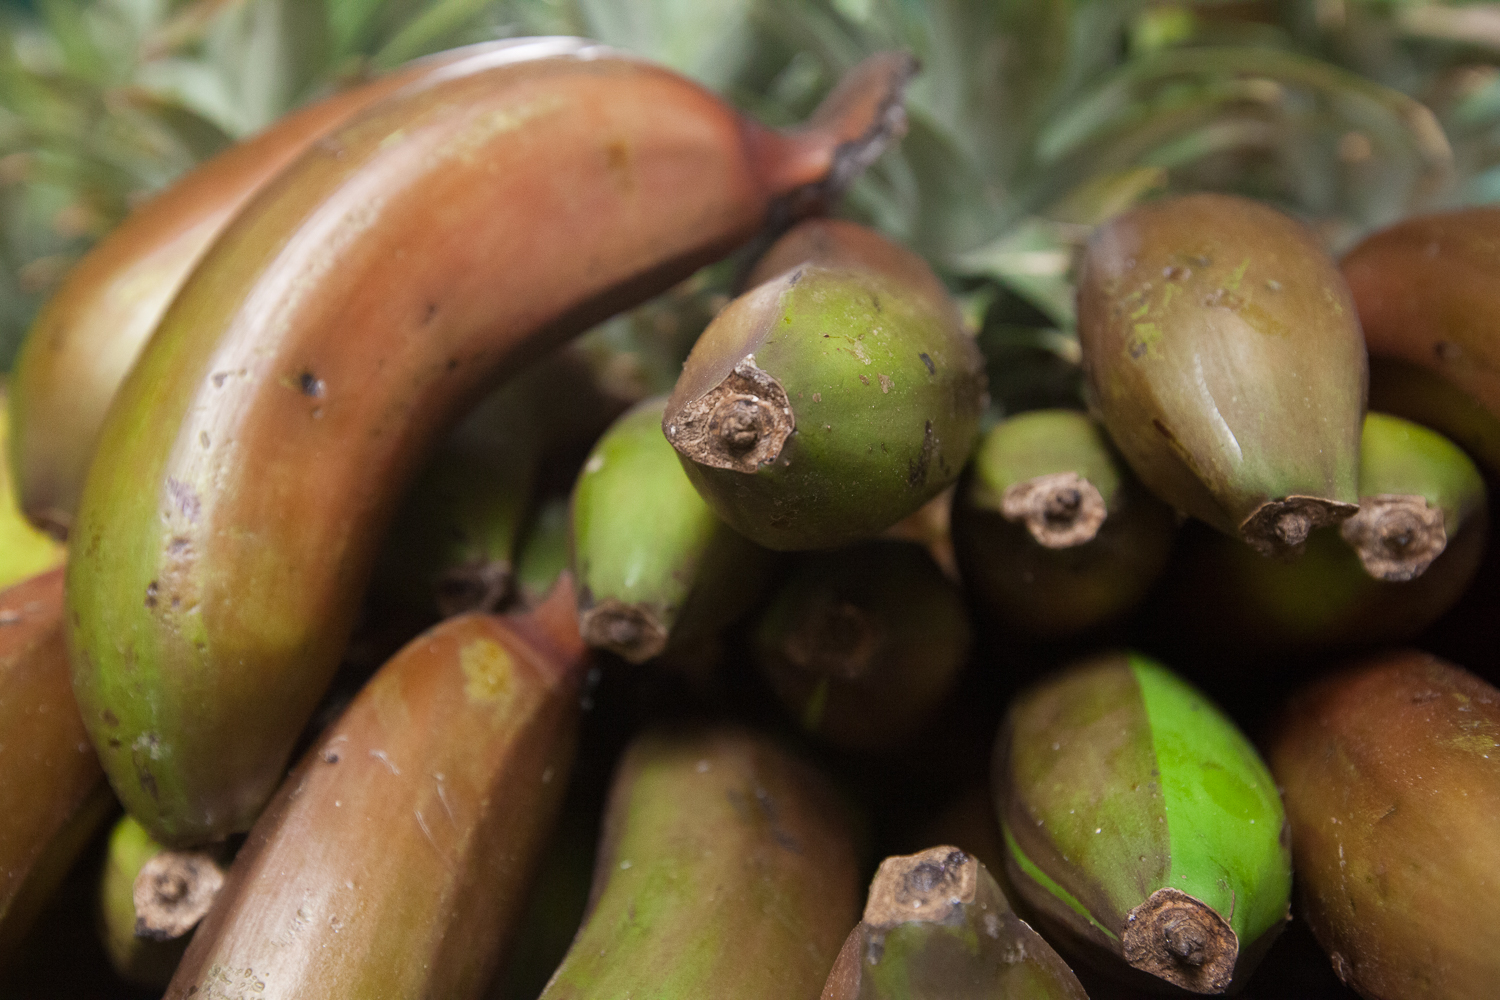 red-bananas-local-organic-produce-department-mana-foods copy.jpg